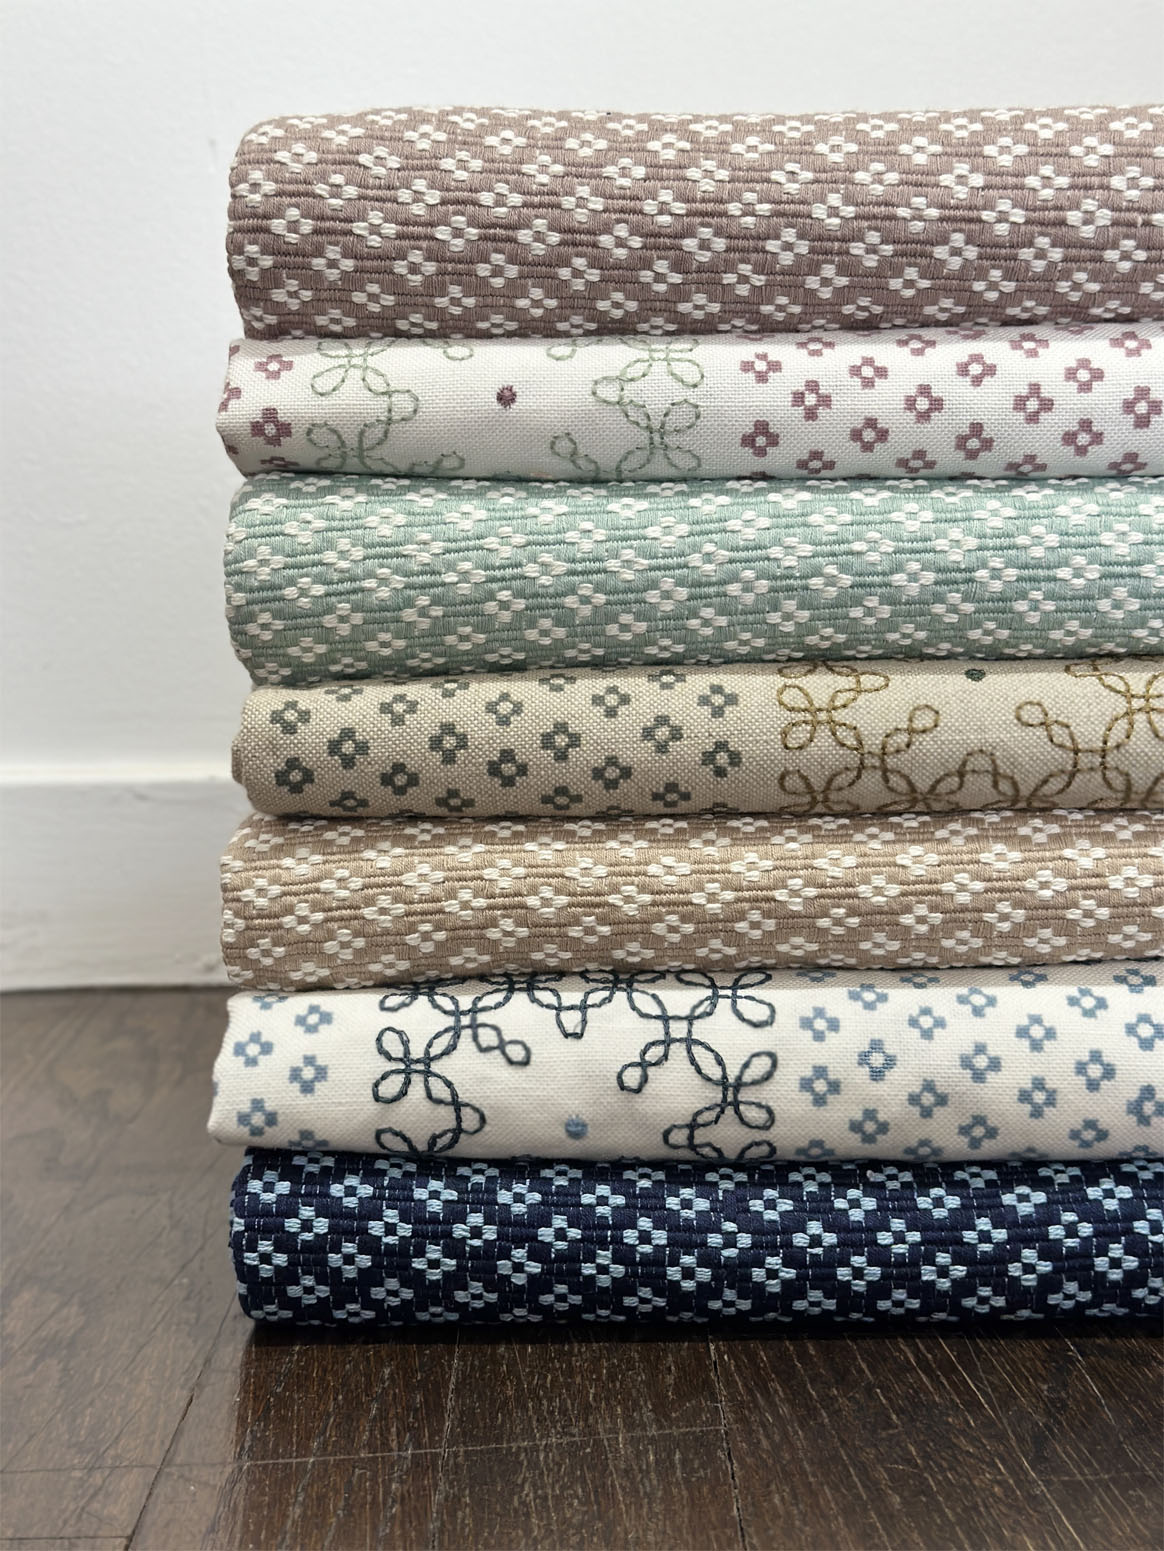 Seemakrish Pacific Linen Designer Fabric by the Yard